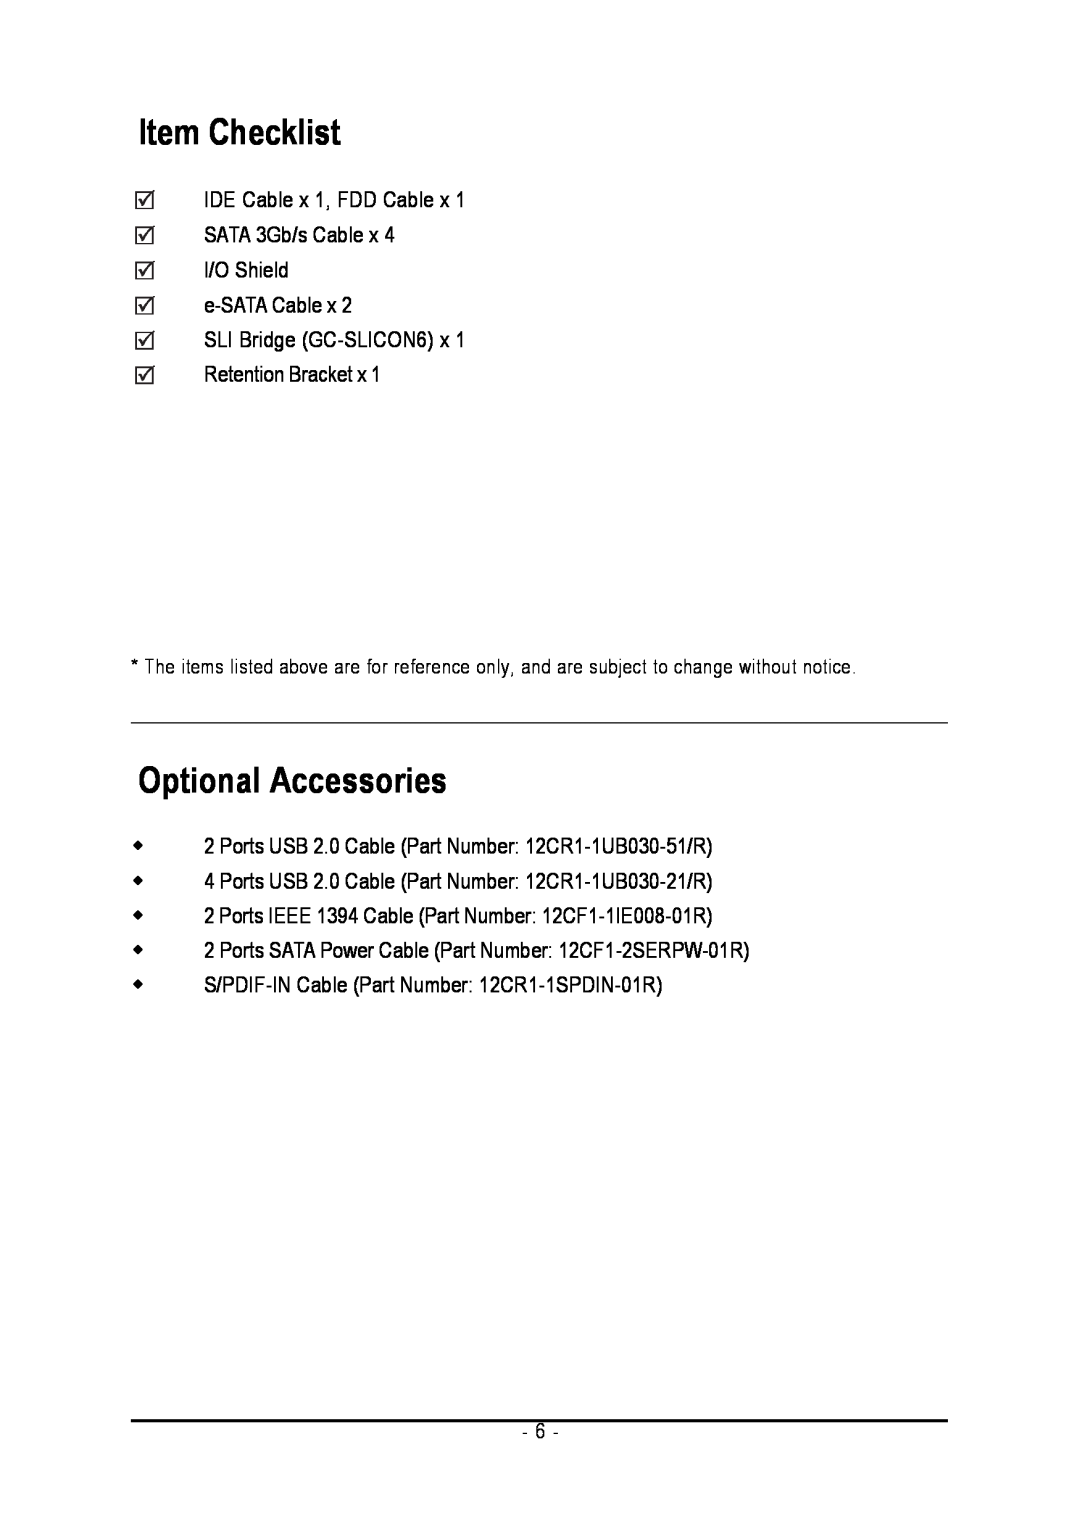 Intel GA-N680SLI-DQ6 user manual Item Checklist, Optional Accessories 